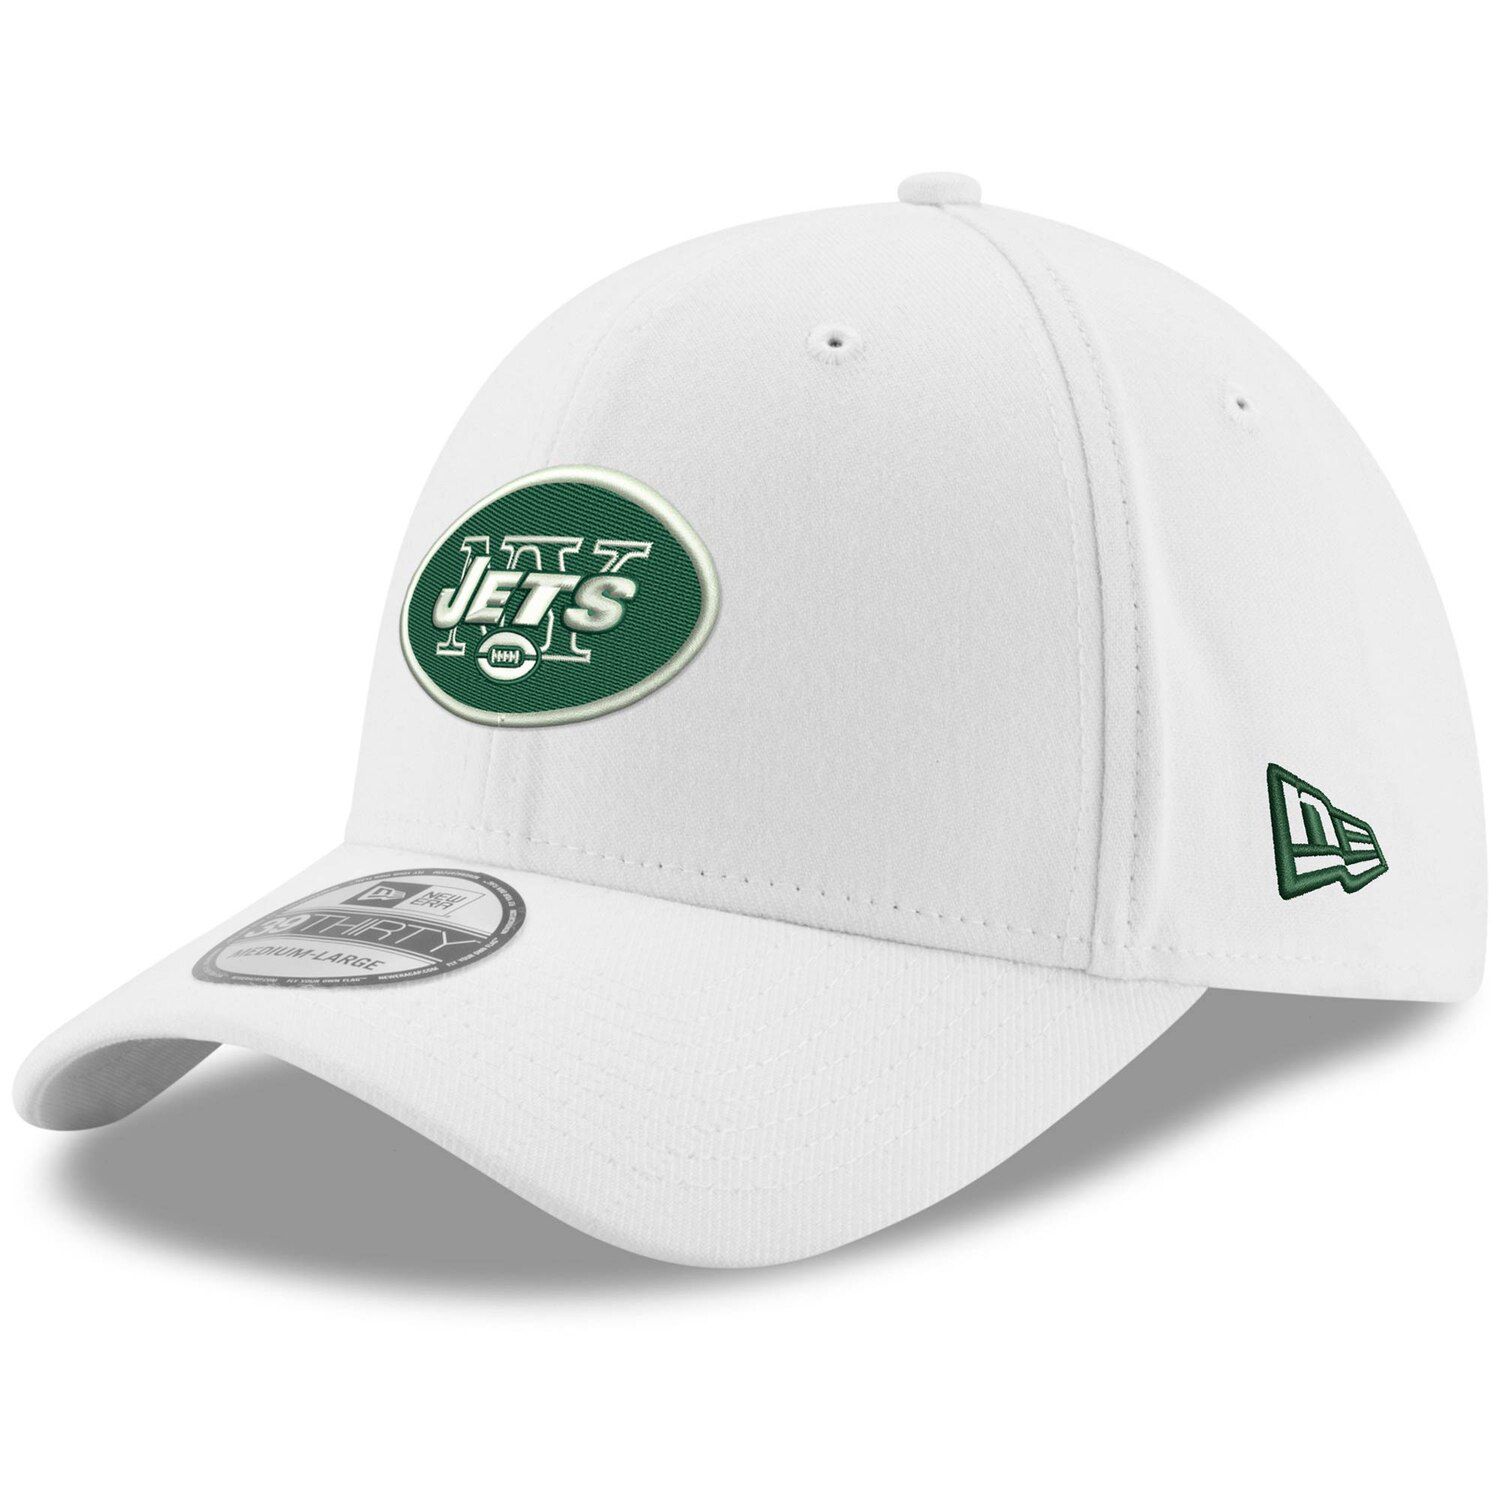 white ny jets hat